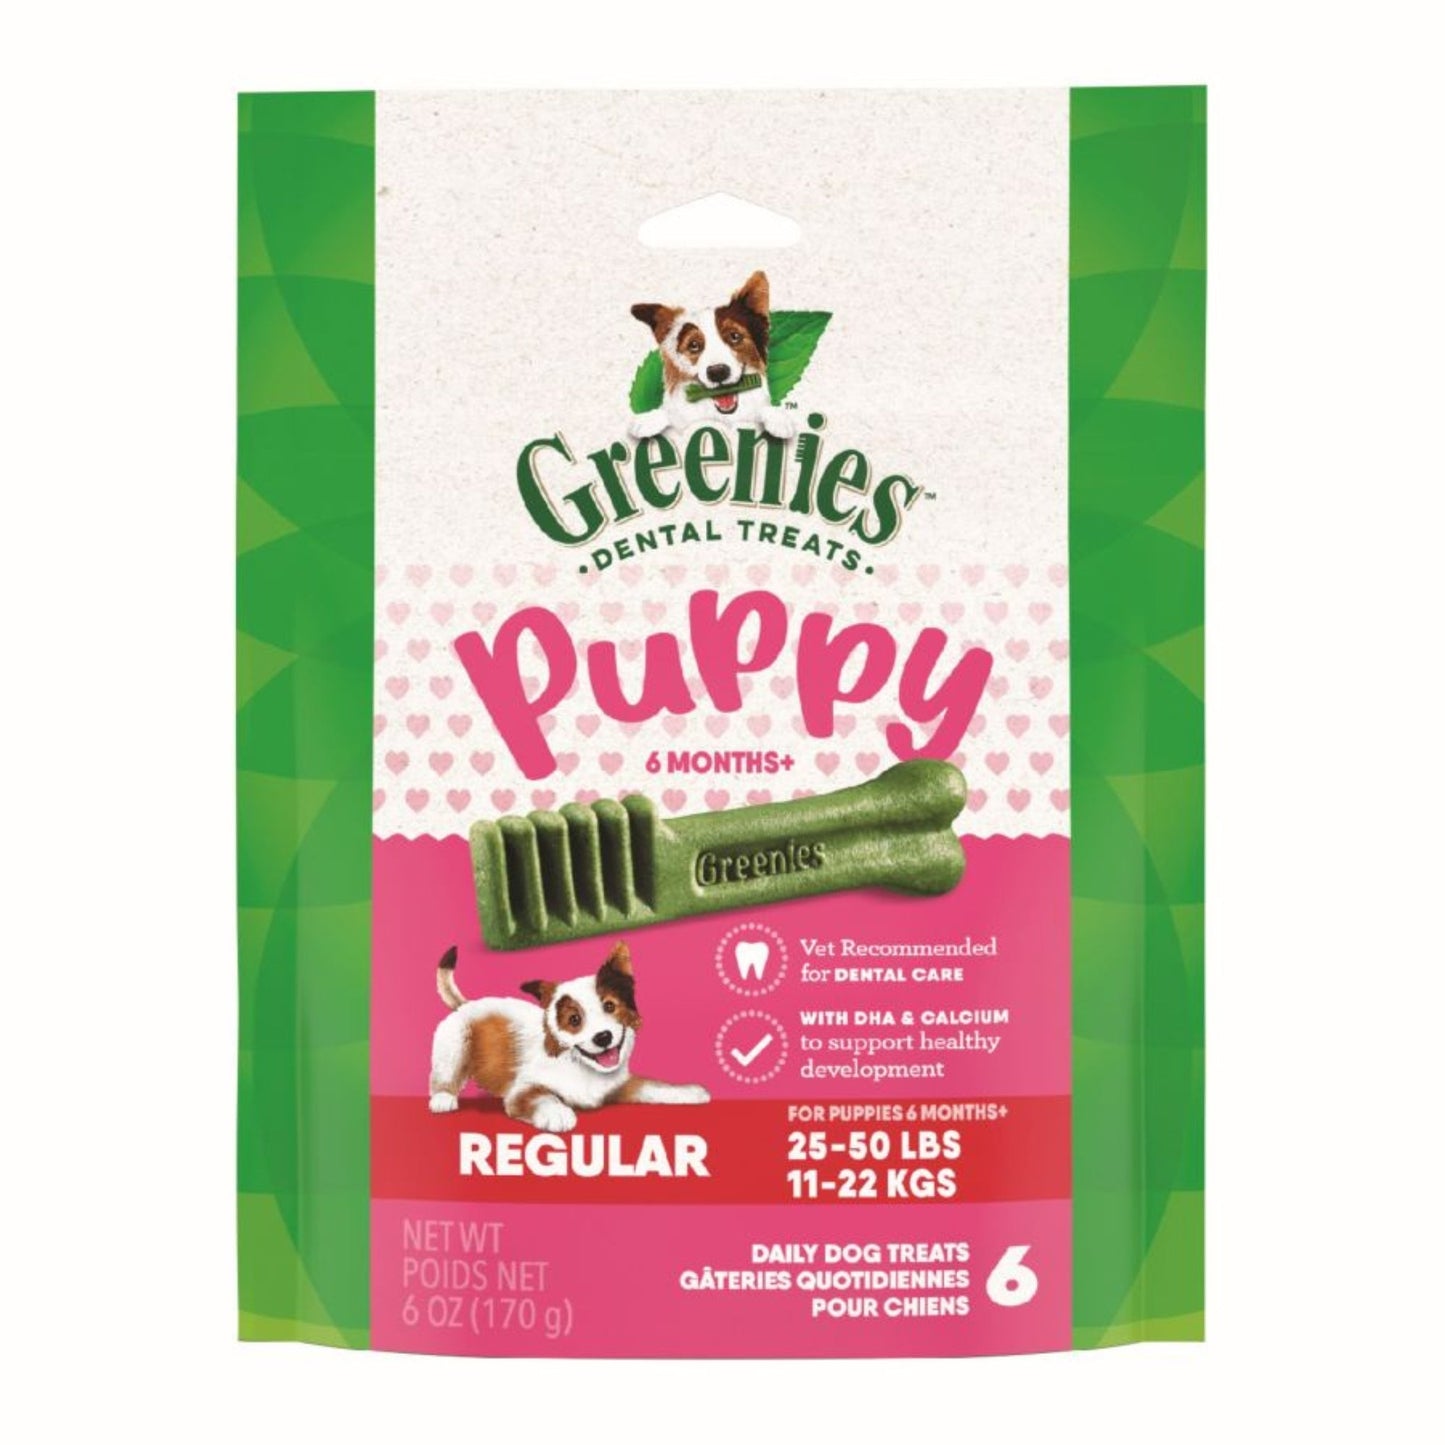 Greenies Puppy 6+ Months Dog Dental Treats Regular, 1ea/6oz.